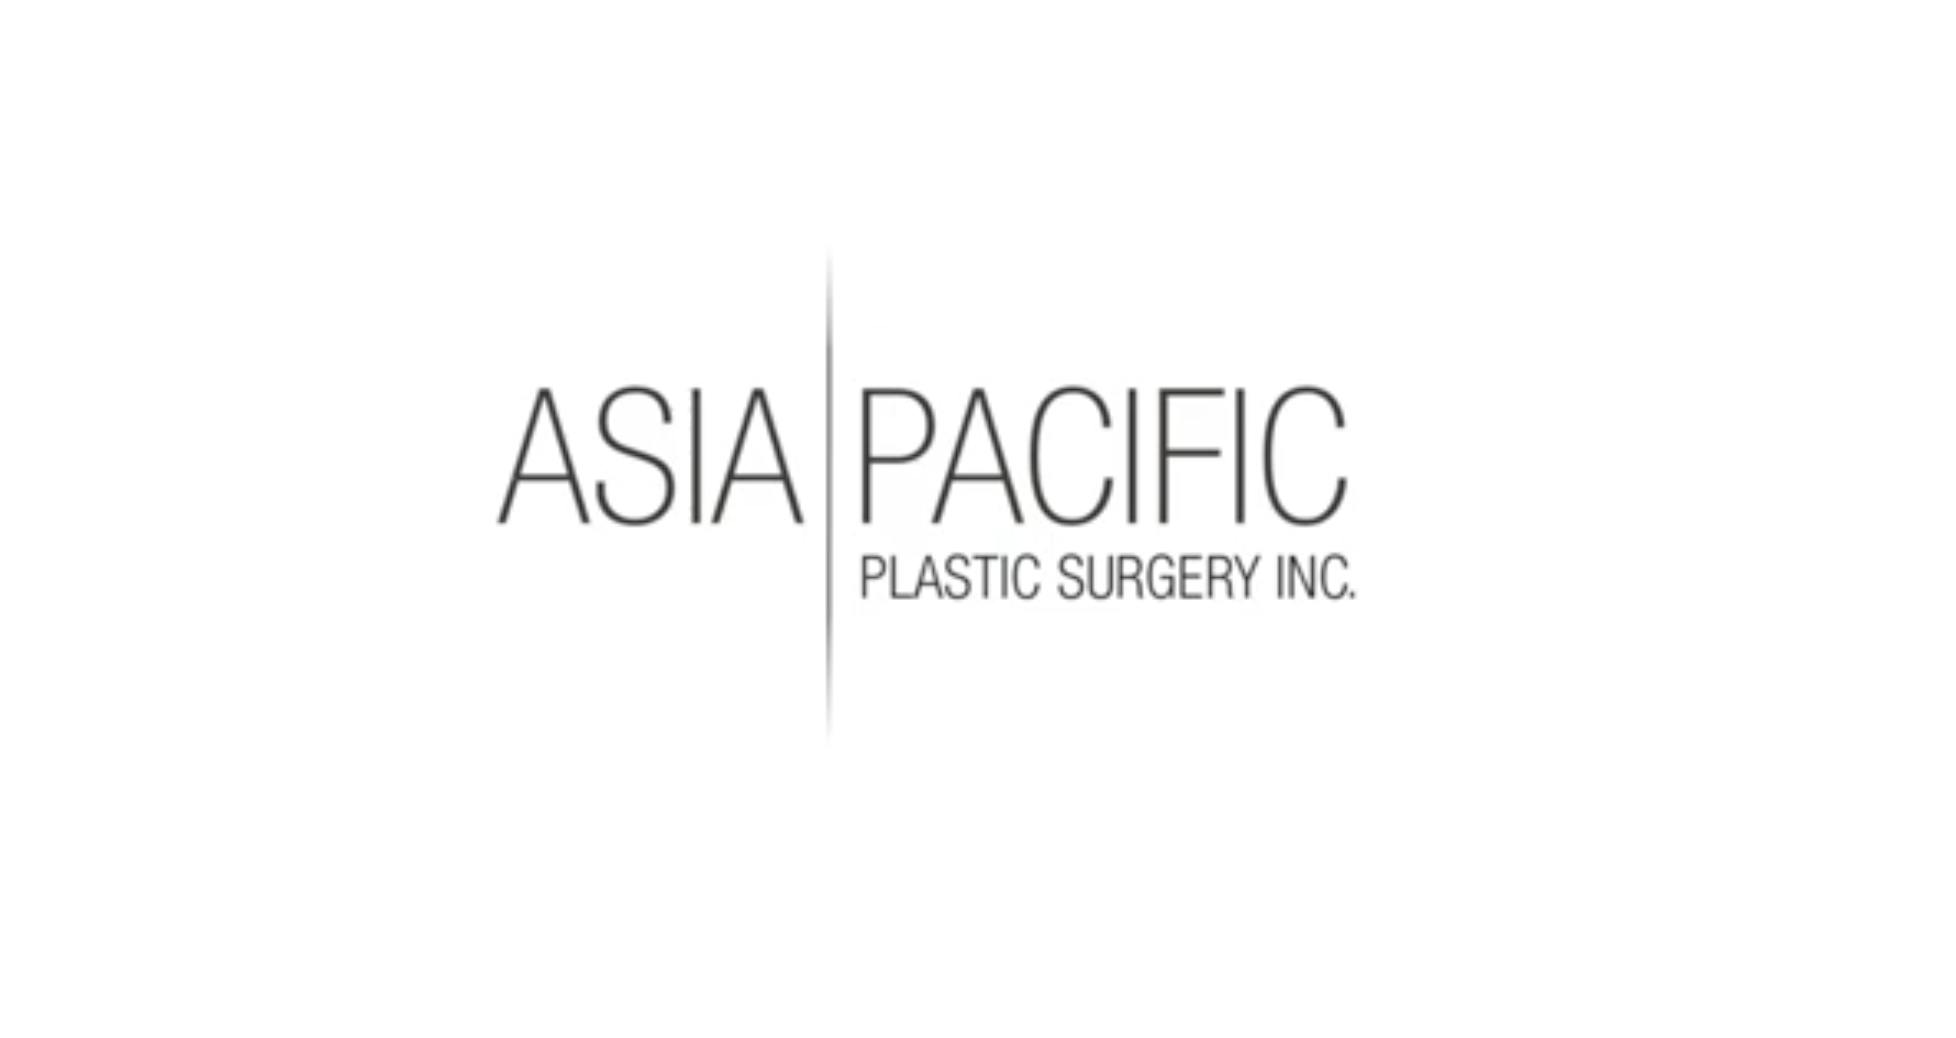 the Asia Pacific Plastic Surgery Inc logo